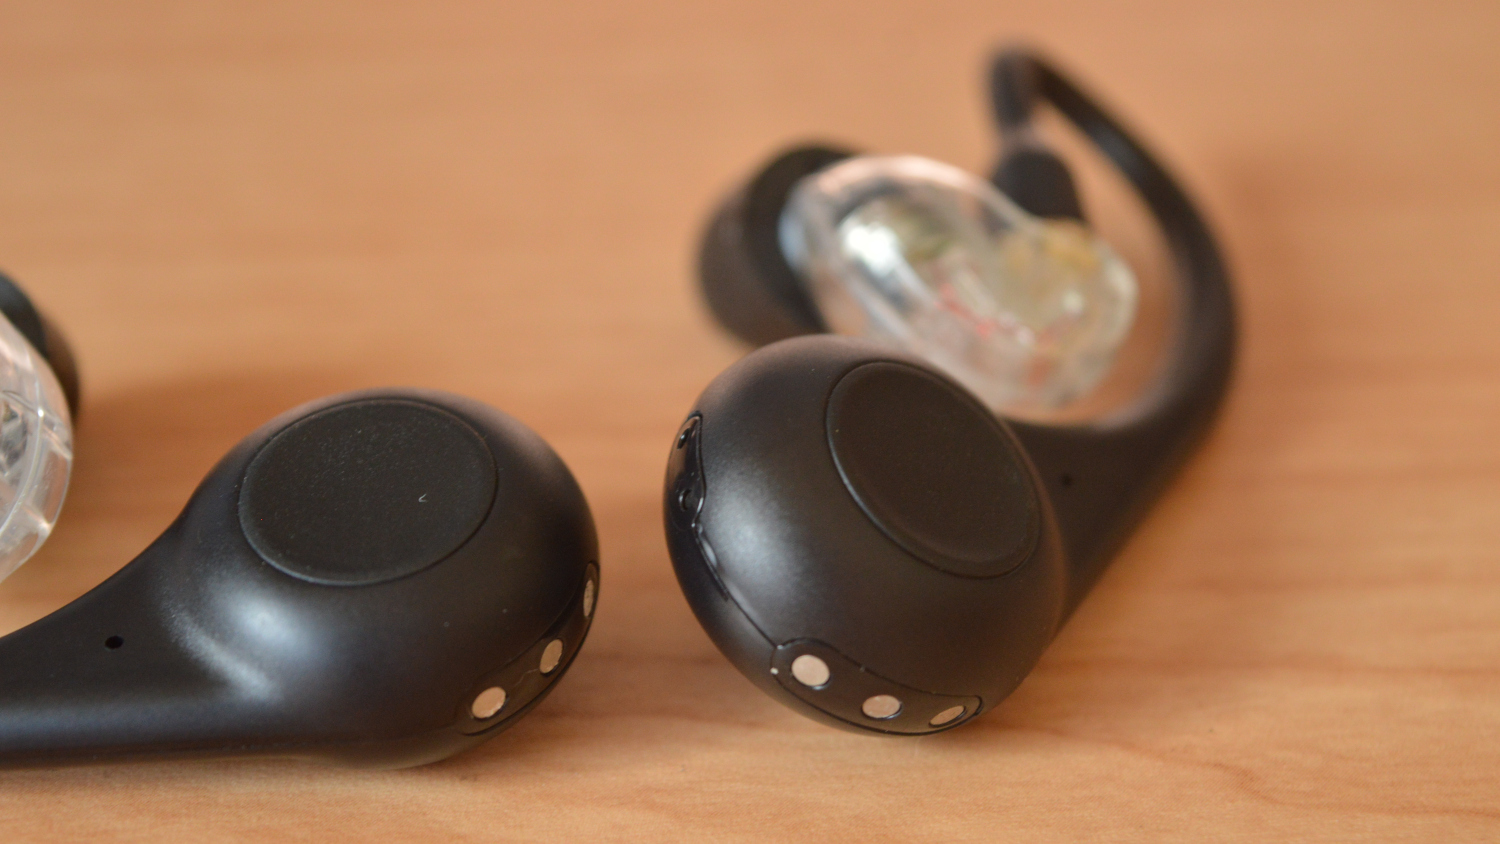 Shure Aonic 215 True Wireless Headphones Review